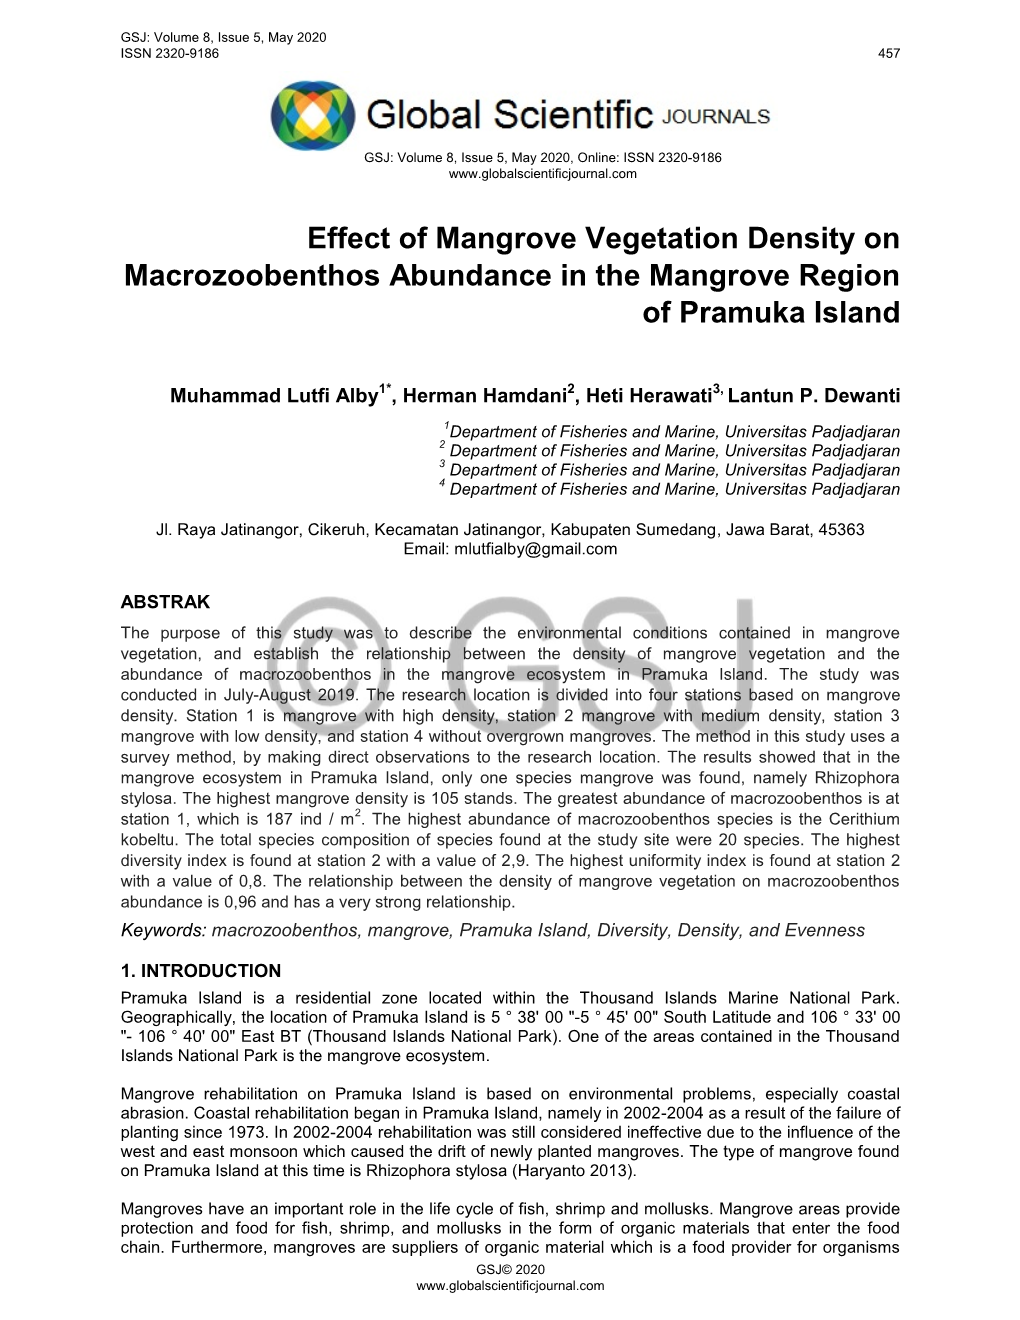 Effect of Mangrove Vegetation Density on Macrozoobenthos Abundance in the Mangrove Region of Pramuka Island